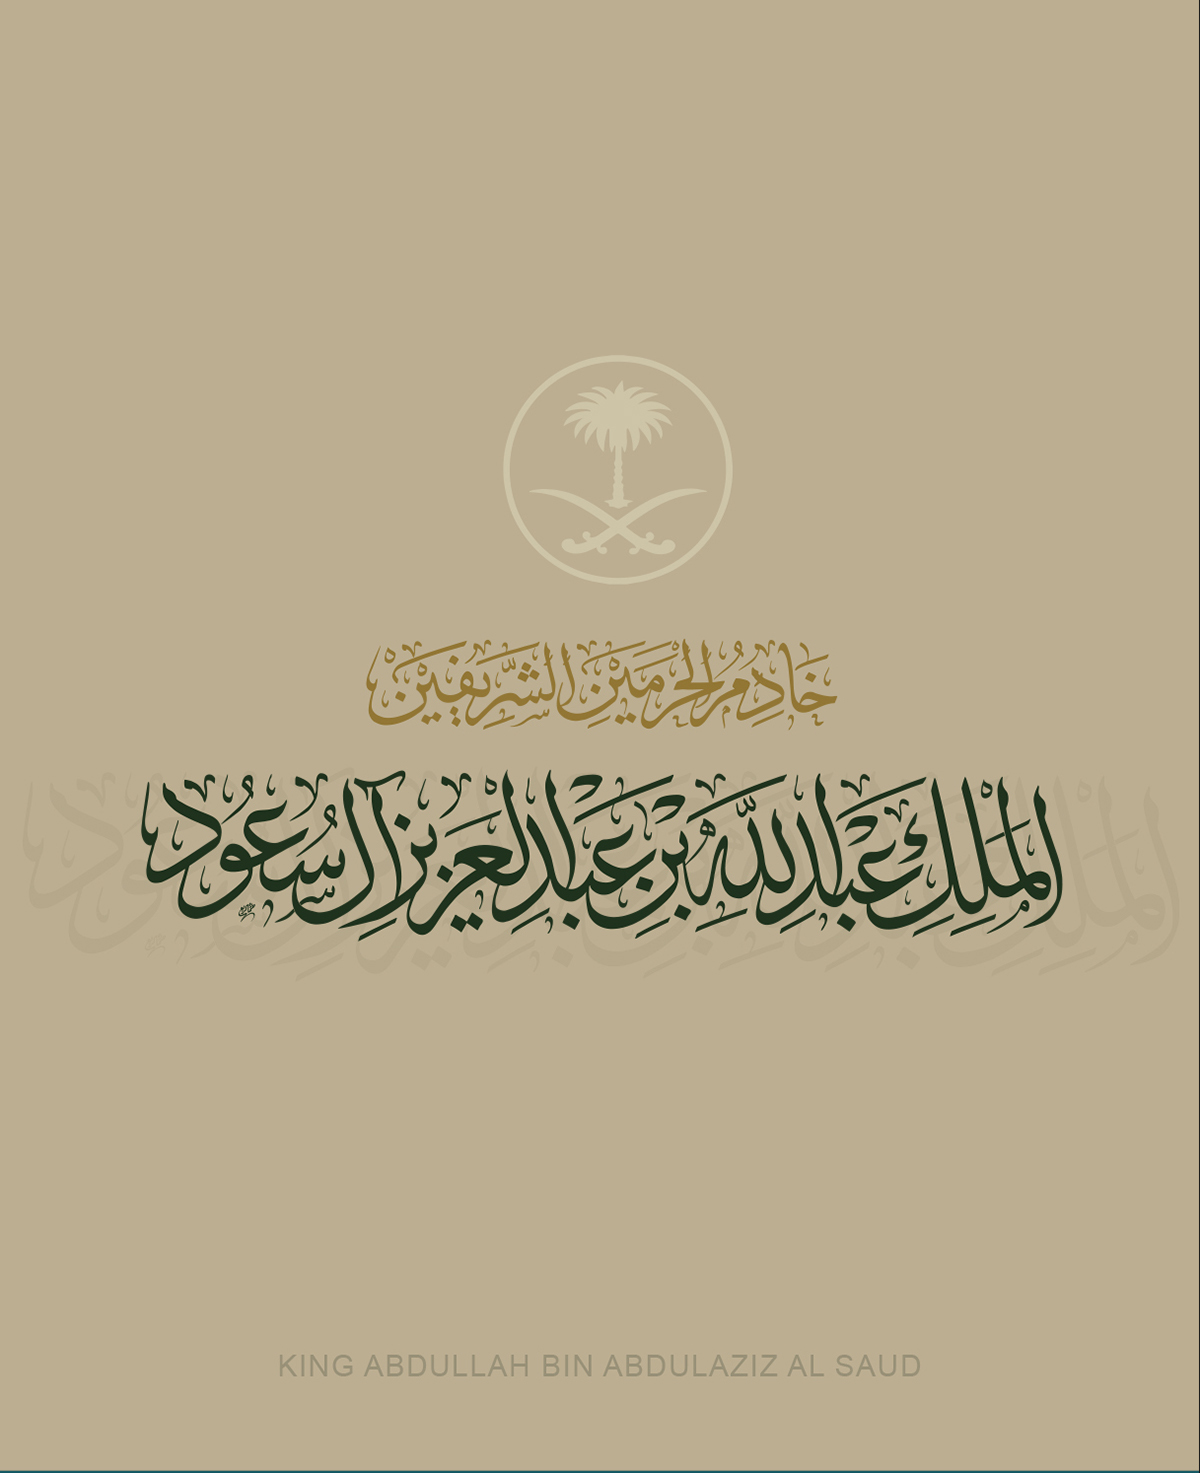 Logos Arabic names arabic branding modern calligraphy arabic Typography Calligraphy names islamic art arabic fonts arabic calligraphy Free style egypt